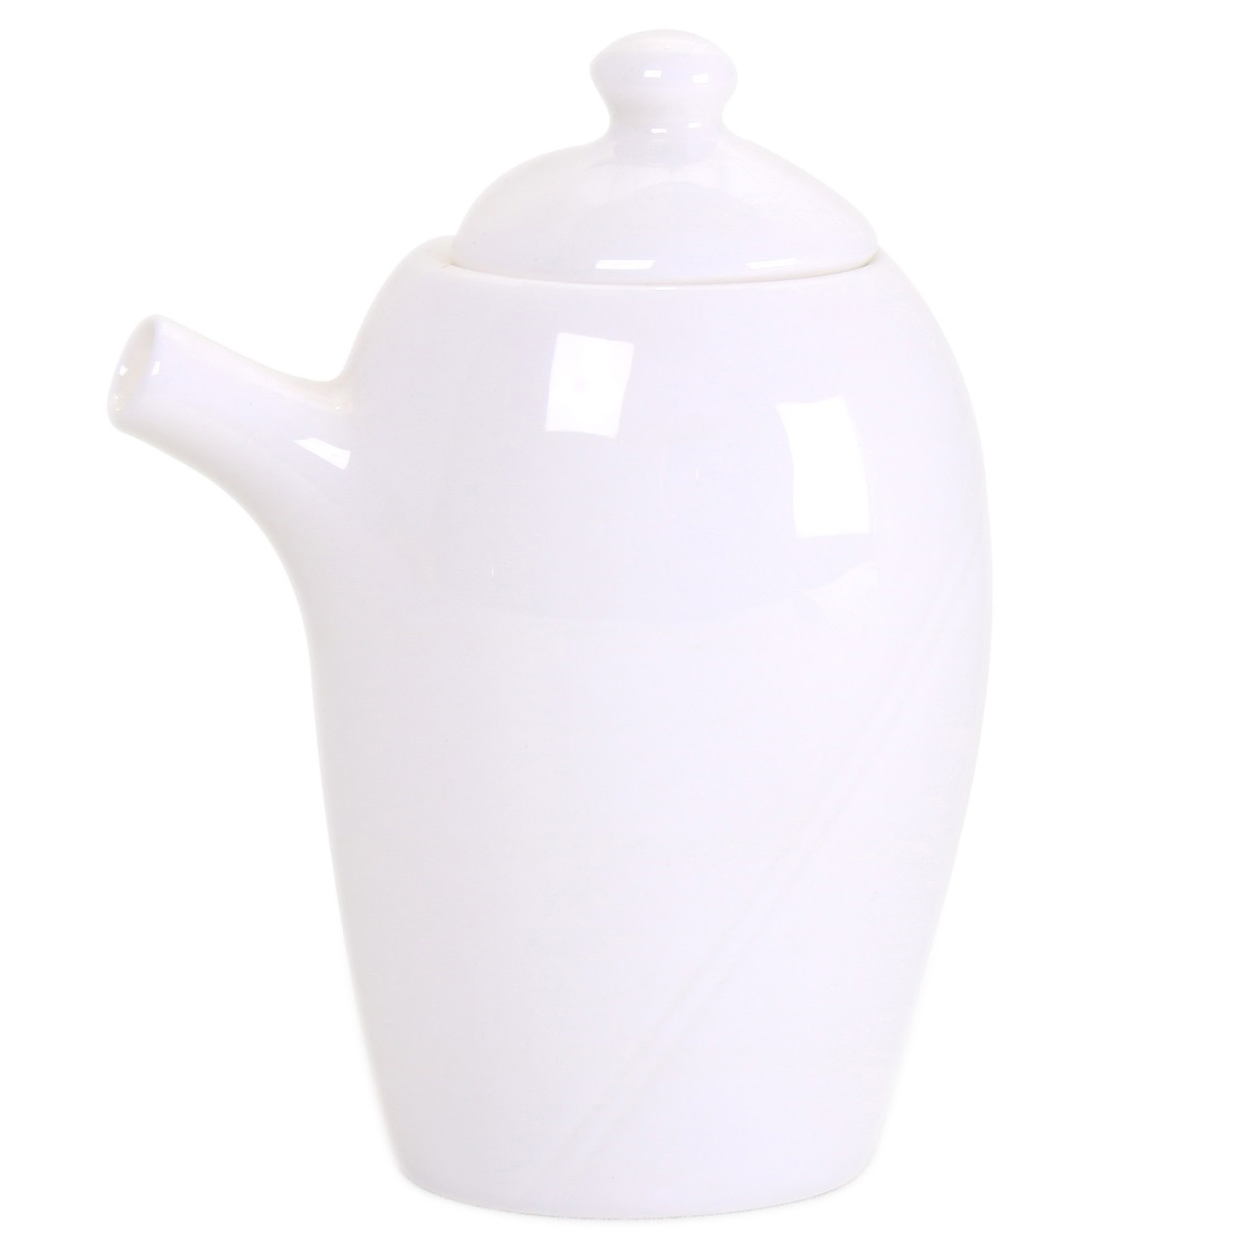 чайник для специй акку белый 150 мл Чайник для специй АККУ Белый 150 мл